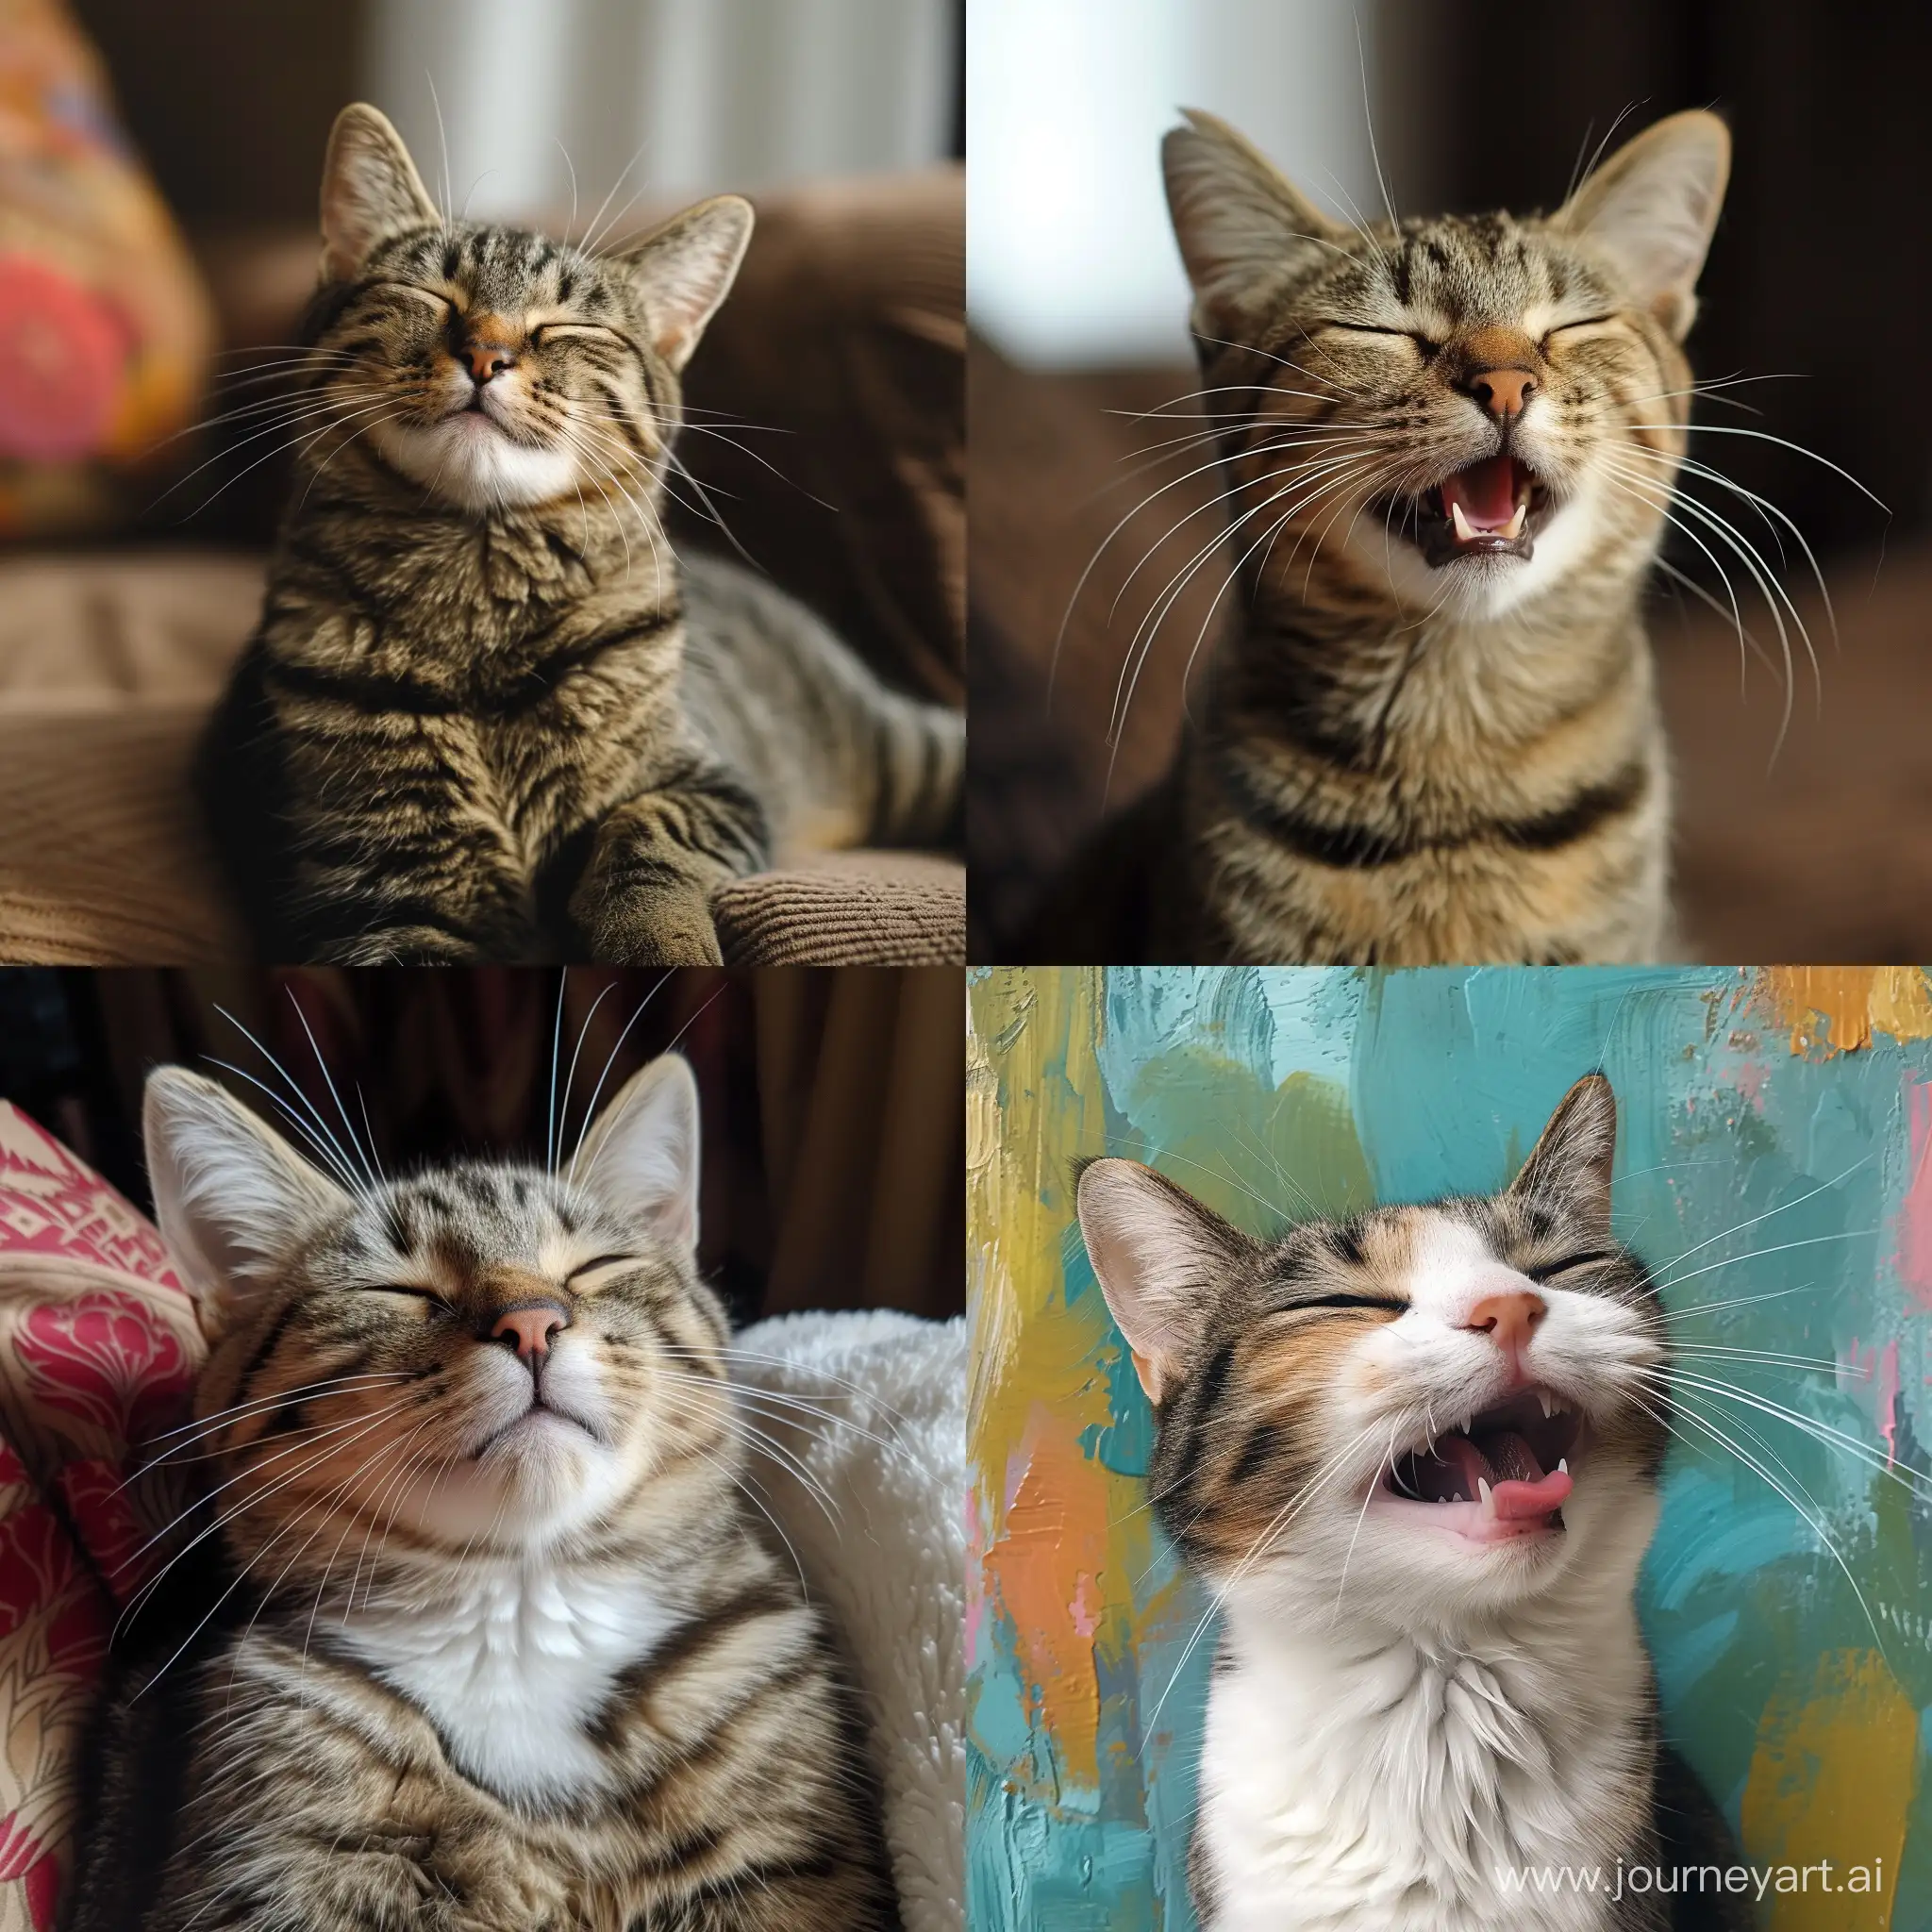 Joyful-Cat-with-Playful-Expression